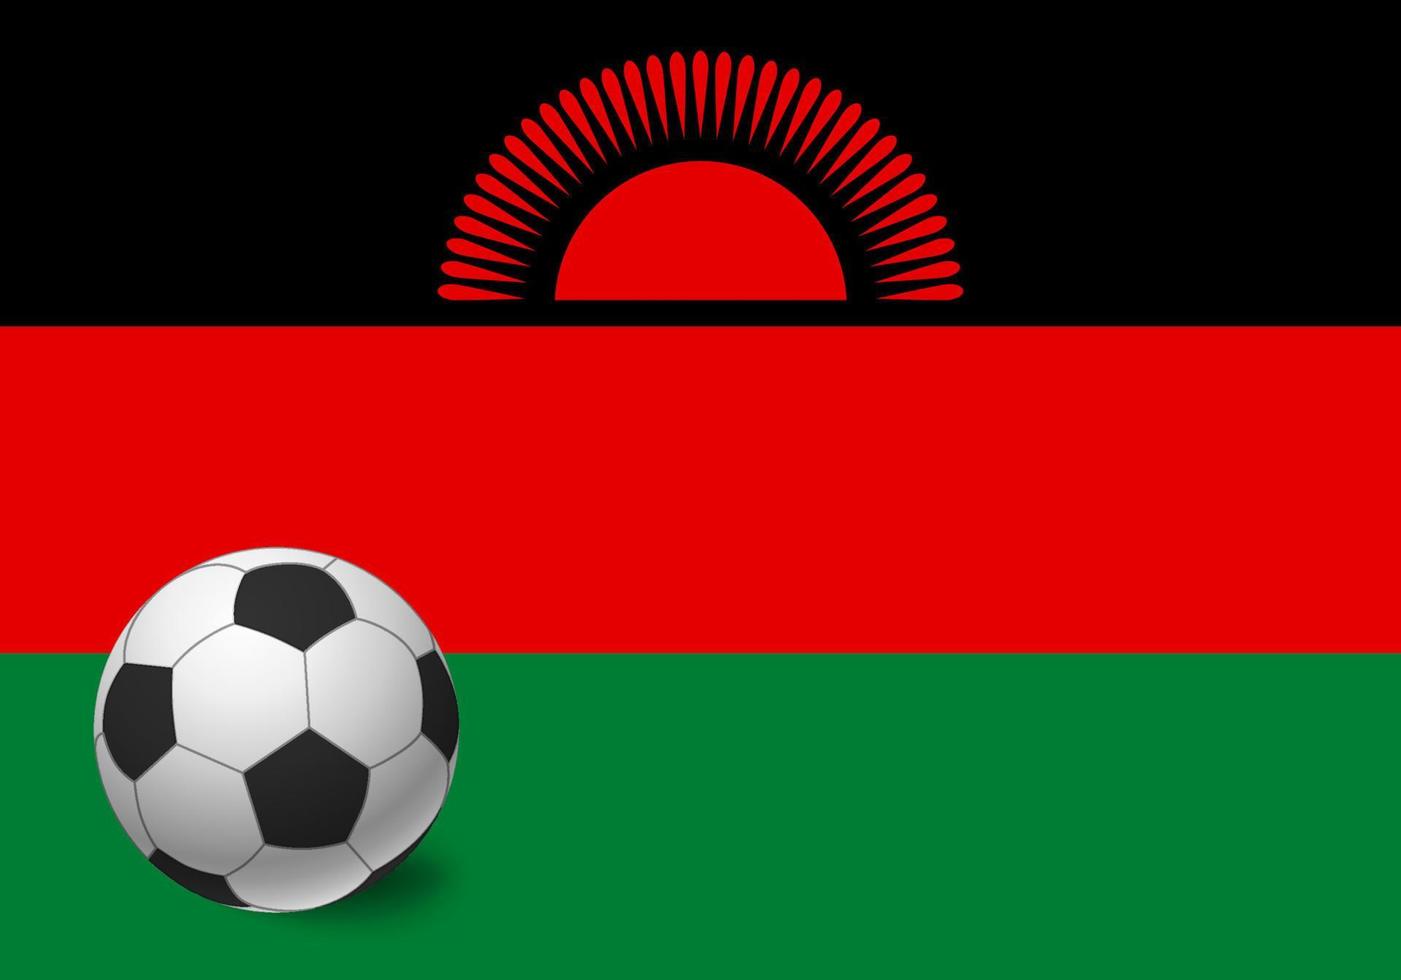 Malawi flag and soccer ball vector